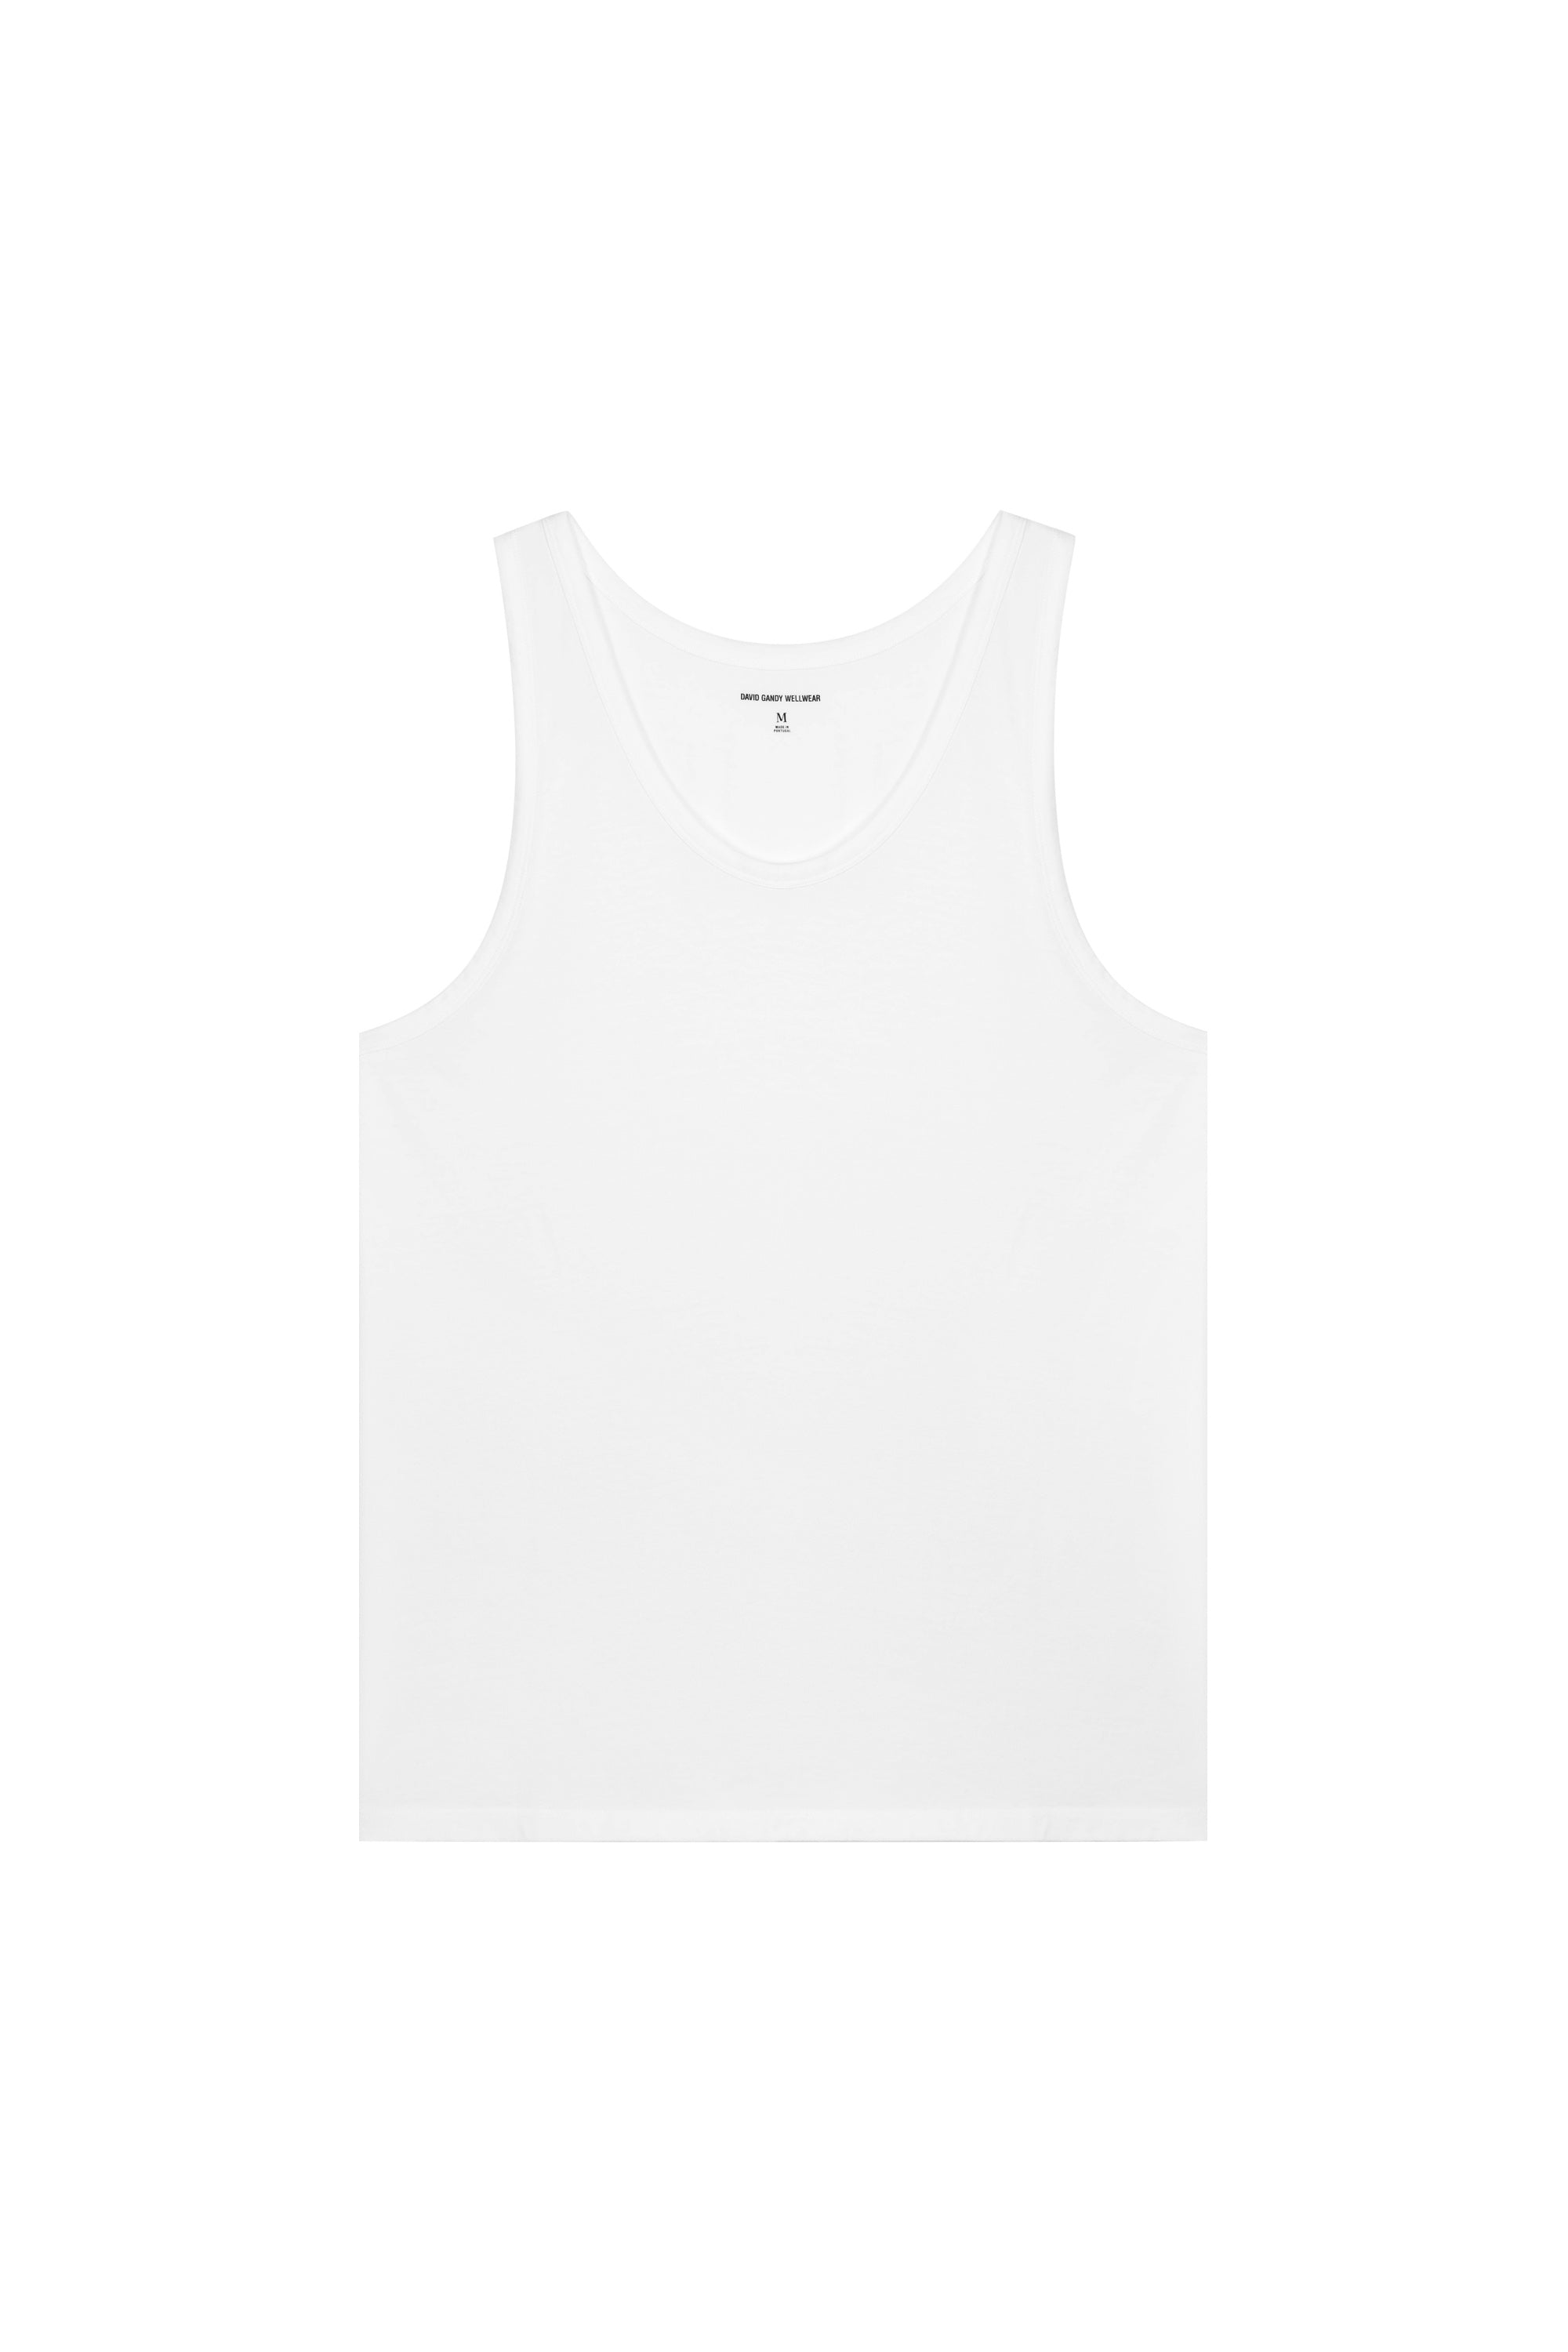 Ultimate Vest - White | David Gandy Wellwear